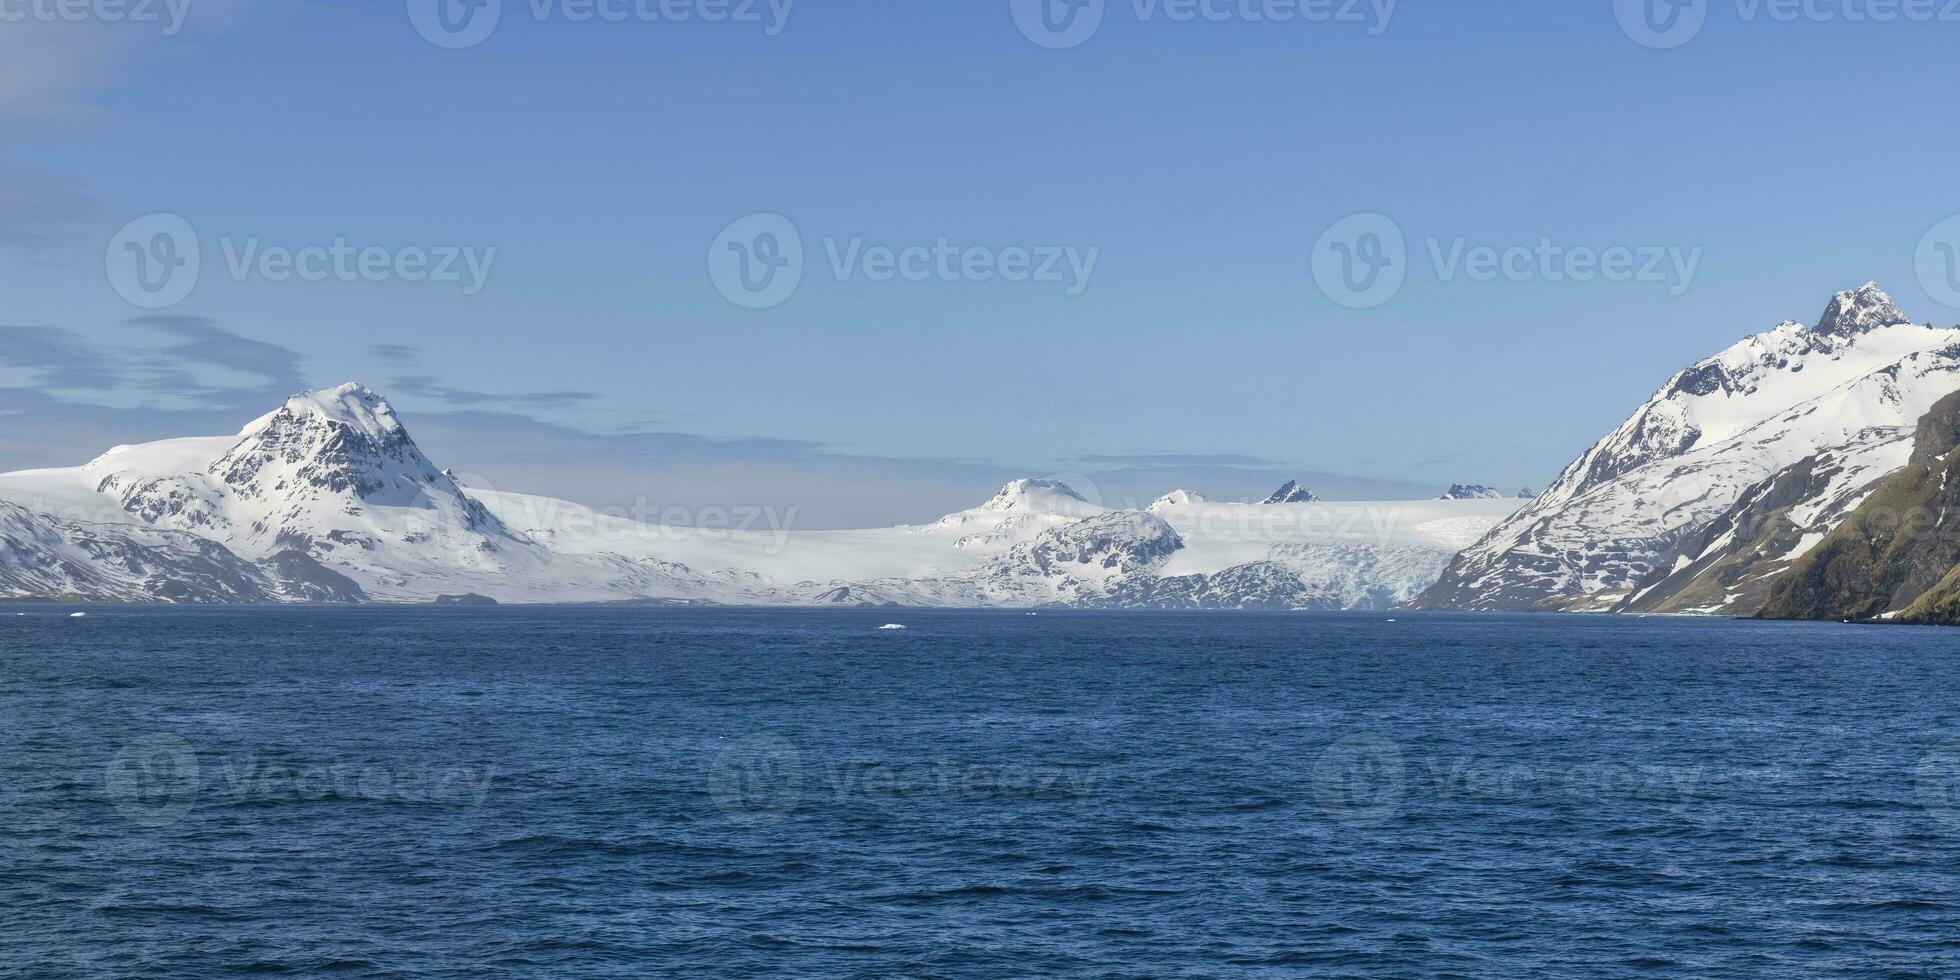 koning haakon baai, sneeuw gedekt bergen en gletsjers, zuiden Georgië, zuiden Georgië en de belegd broodje eilanden, antarctica foto